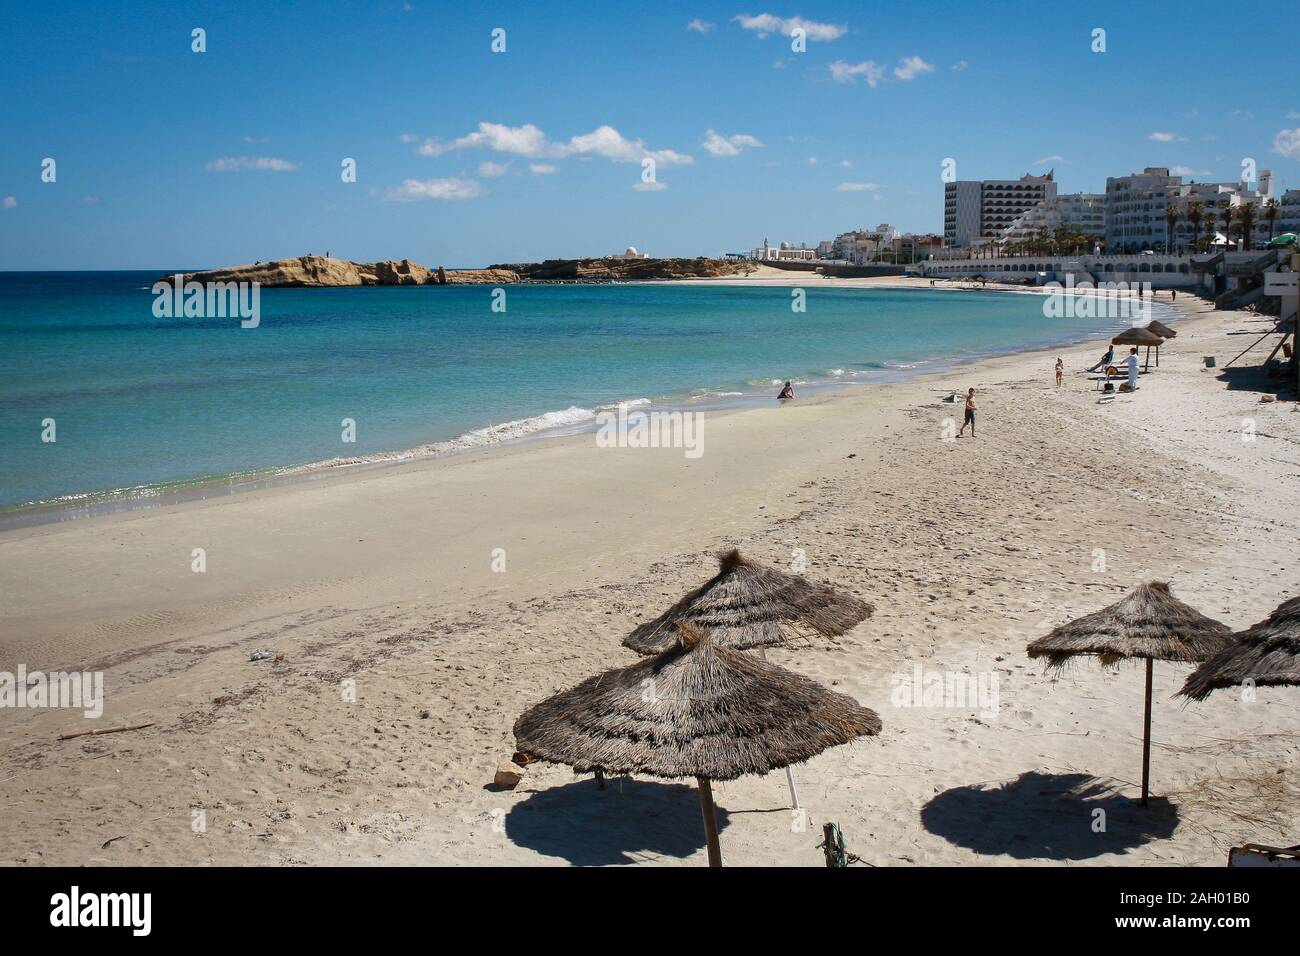 Plage Karaia, or Karaia Beach is one of the points of interests in Monastir, Tunisia Stock Photo